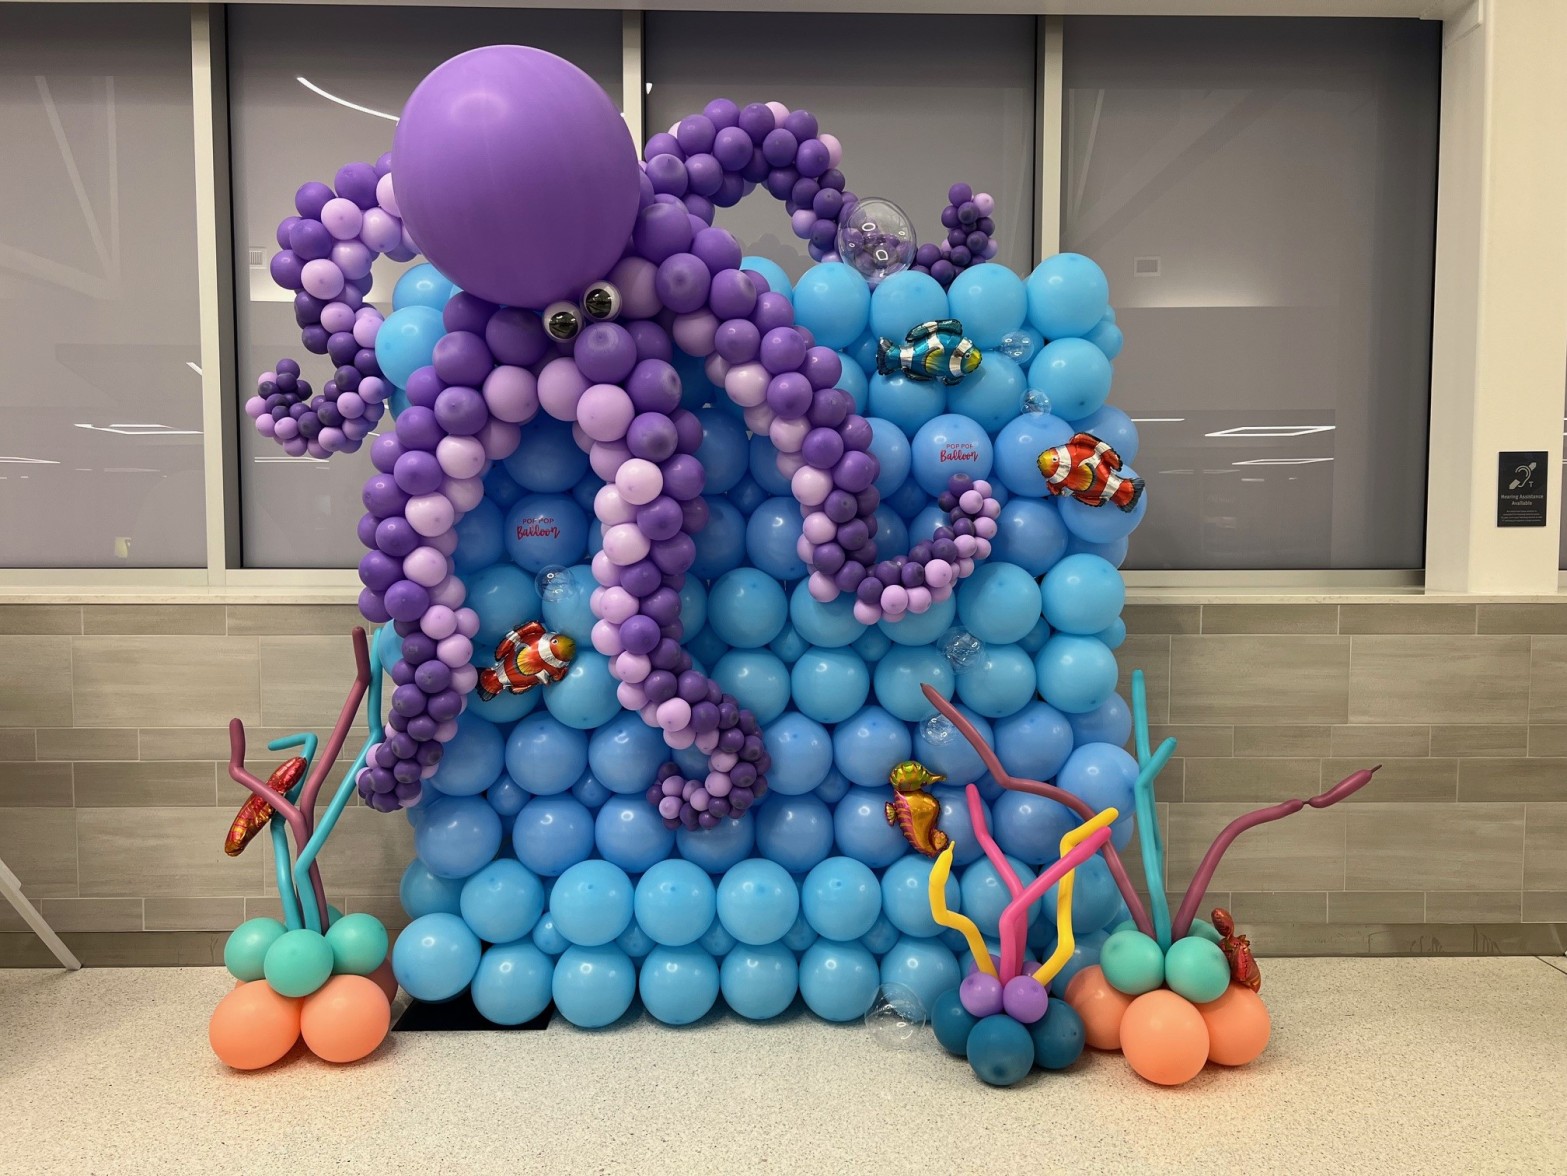 A purple octopus balloon sculpture